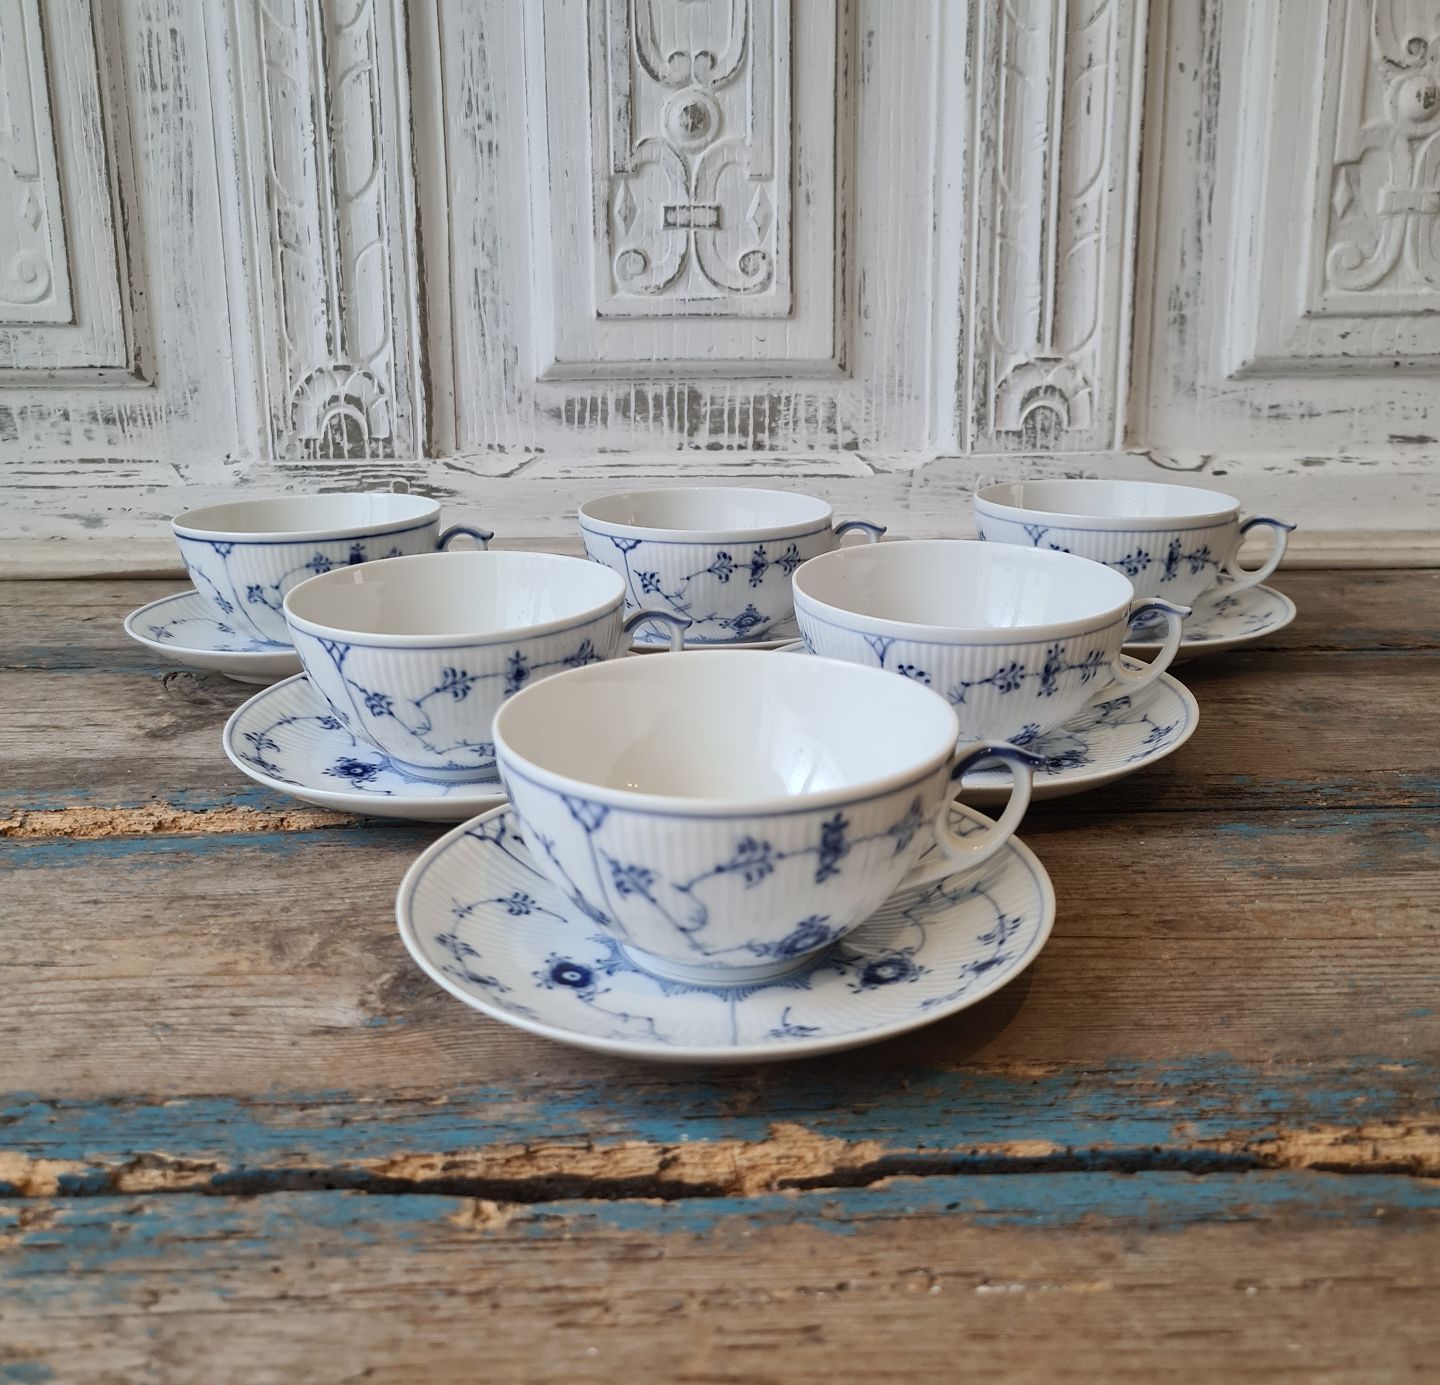  Royal Copenhagen Blue Fluted large teacup No. 315,  Factory second